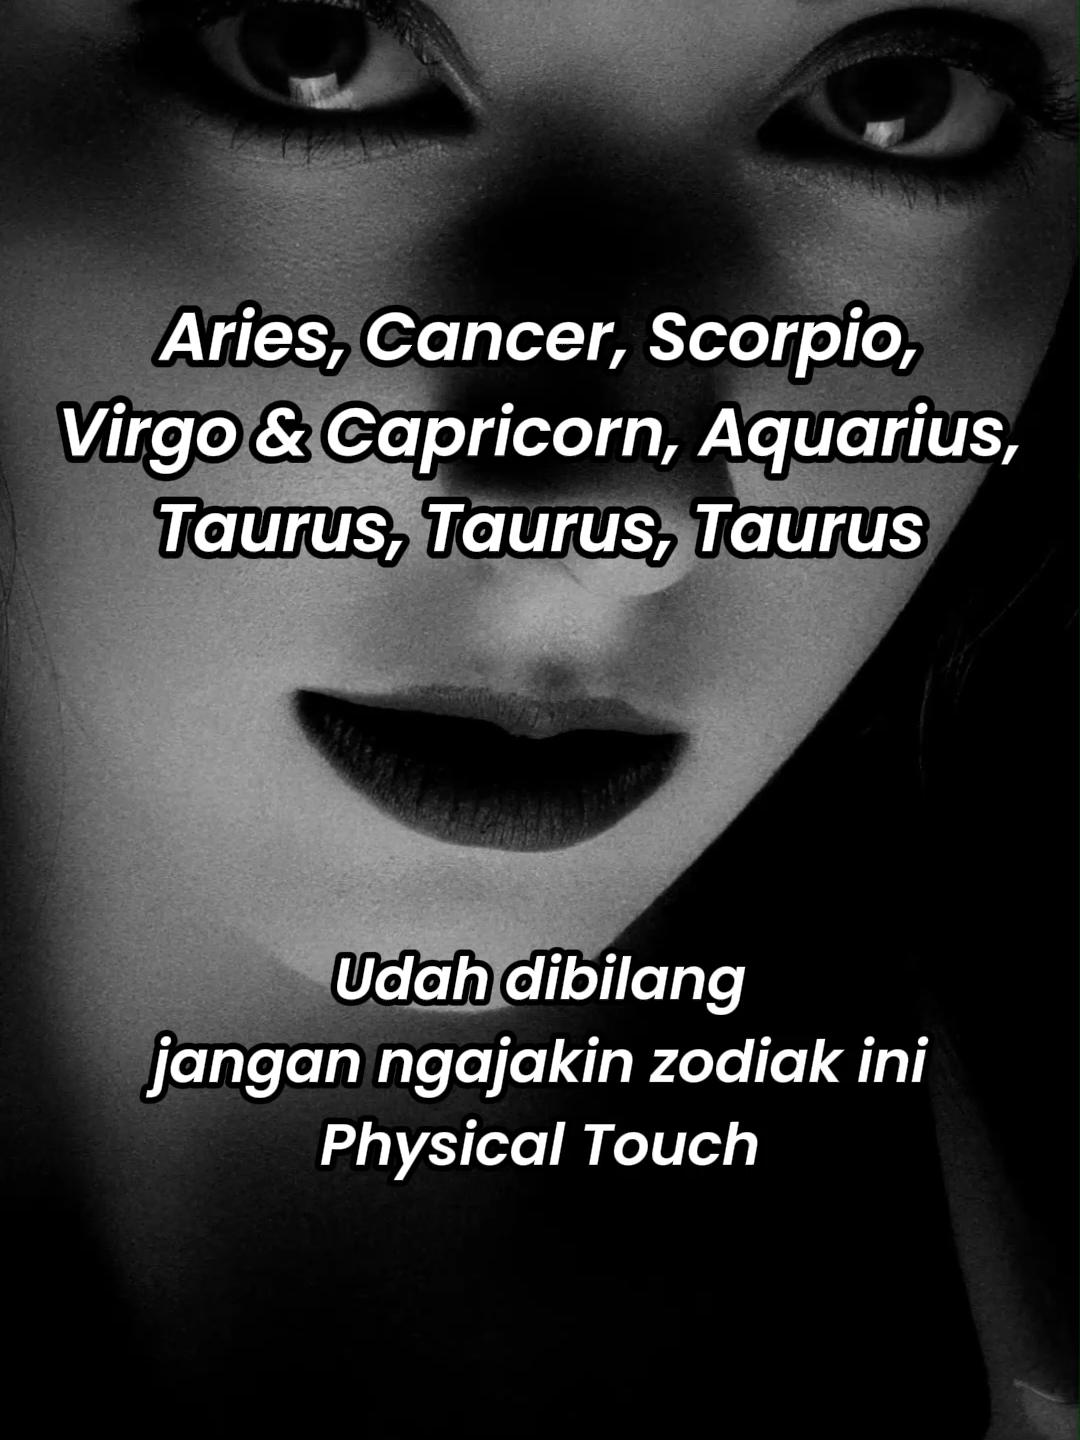 Takut kamu susah lupa kena physical touch zodiak ini #CapCut #fyp #zodiac